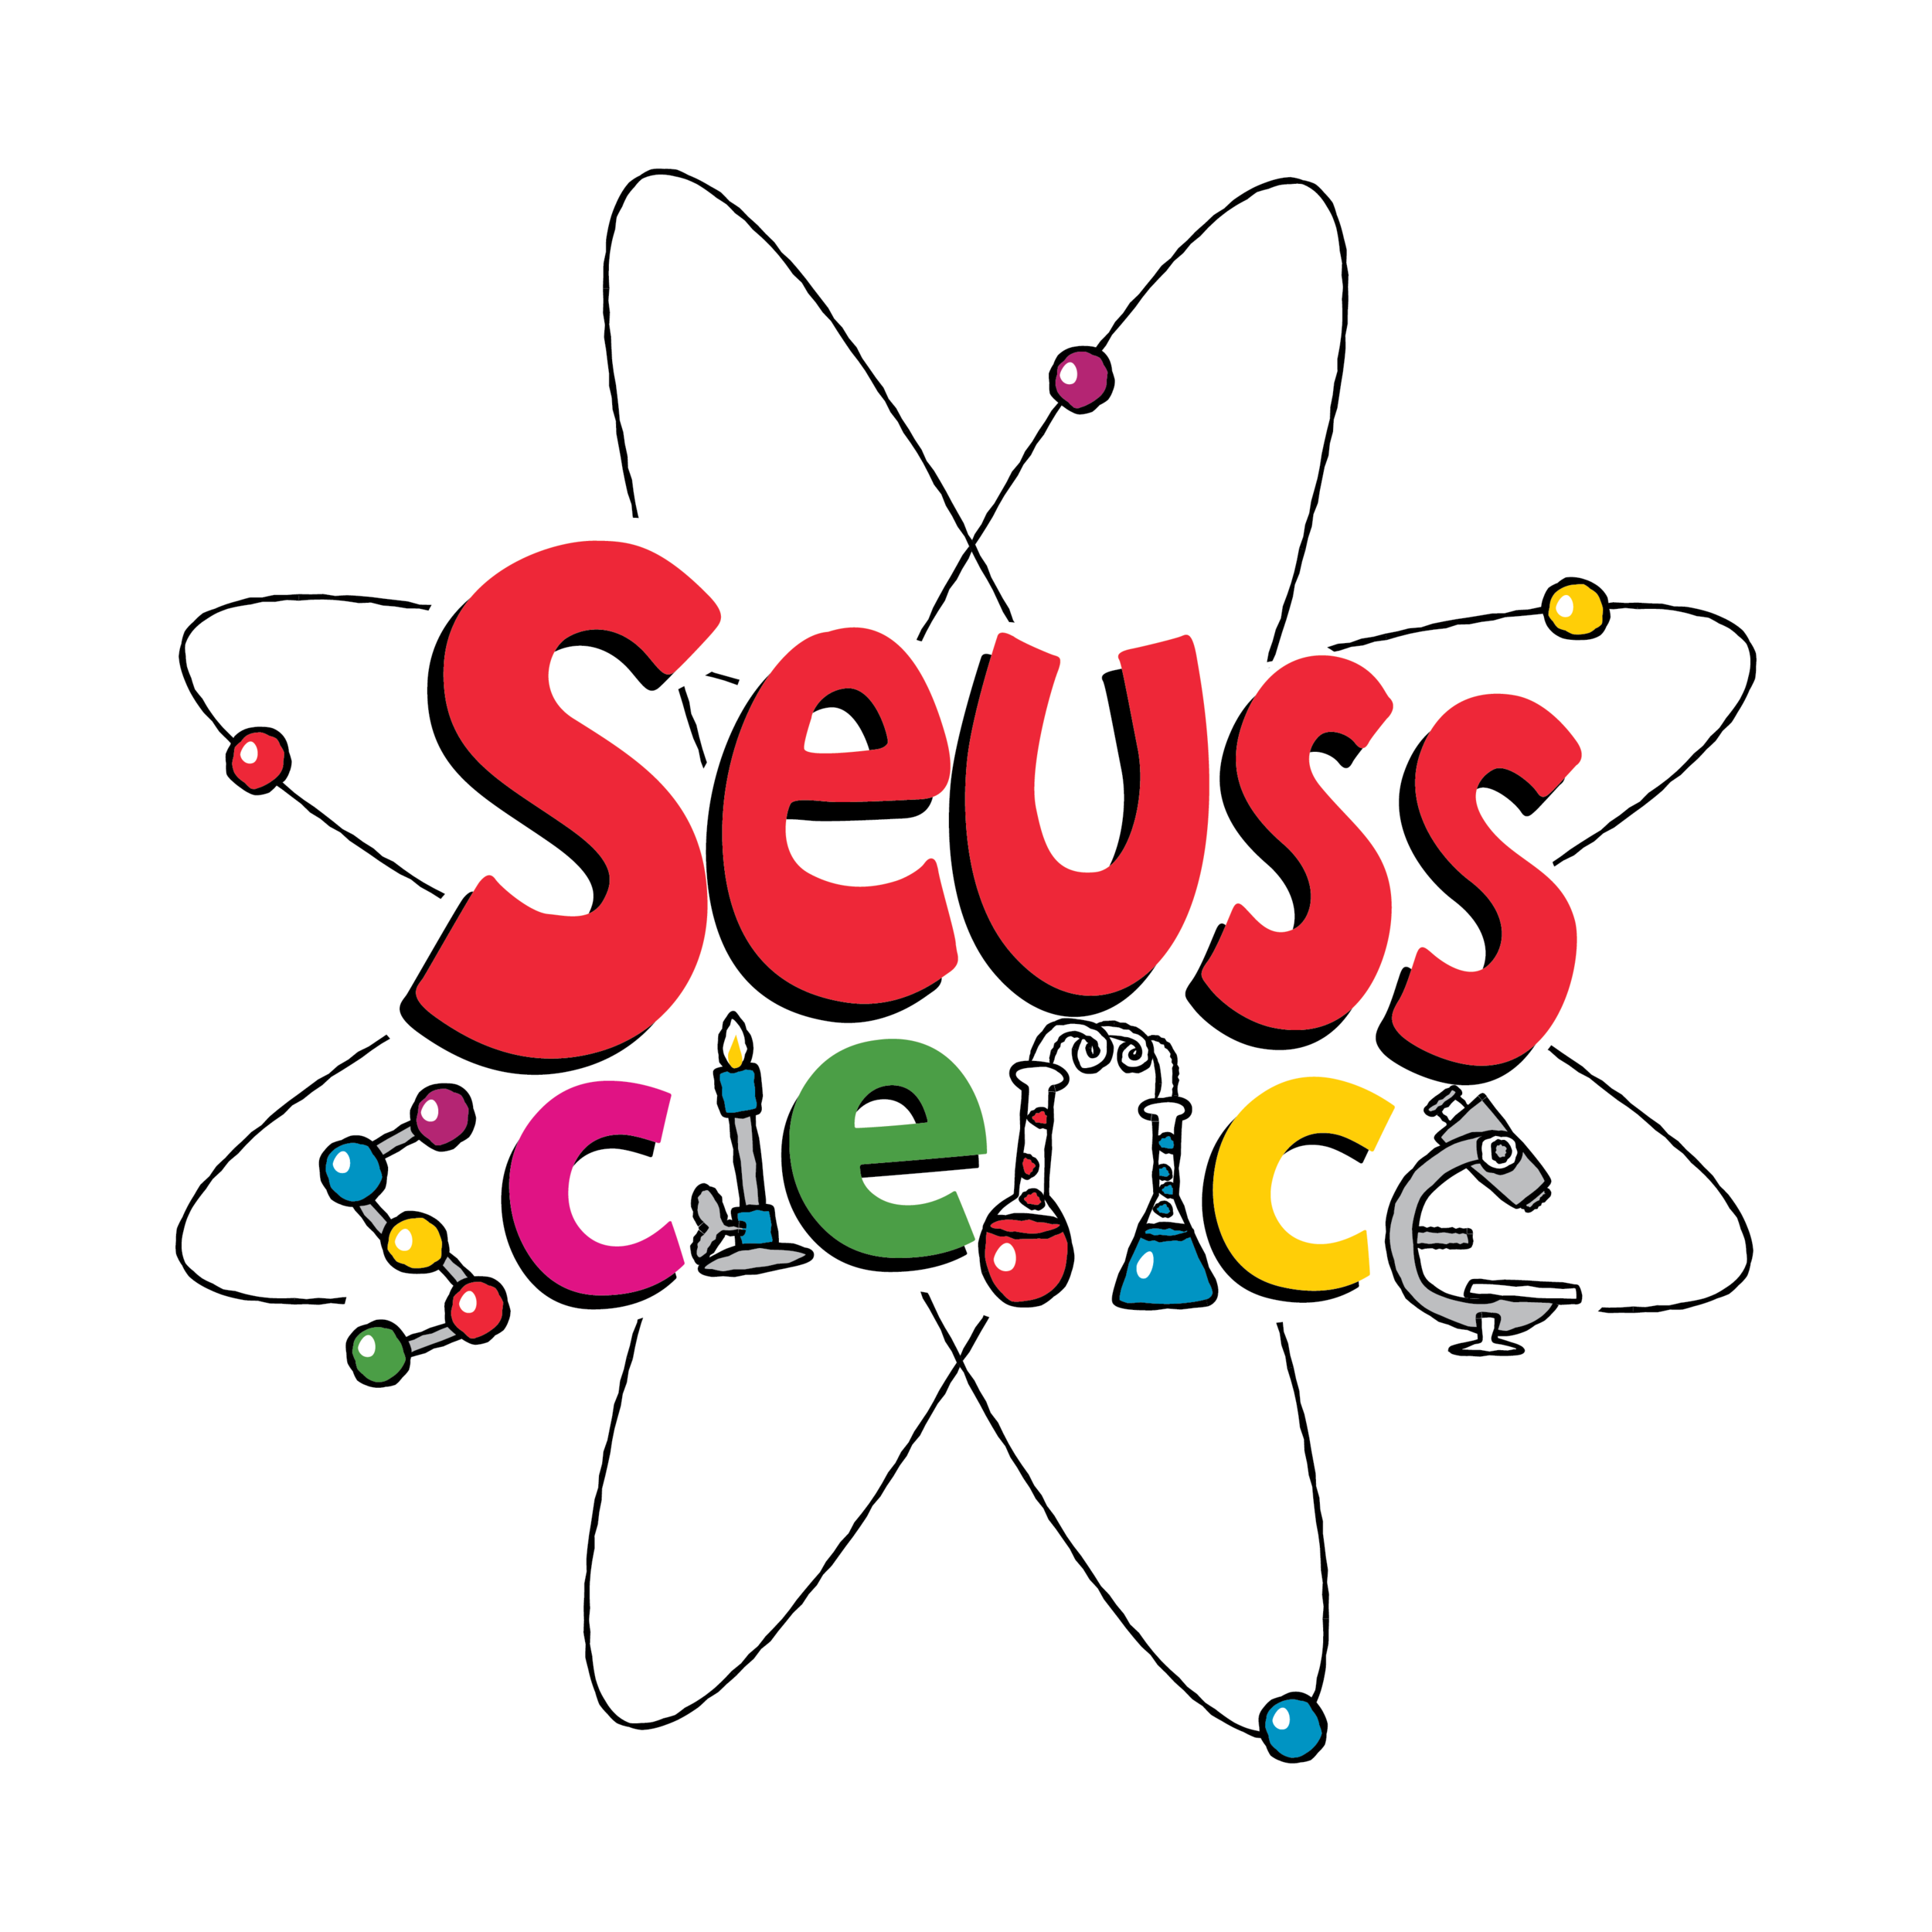 Seuss_Science_Logo.png